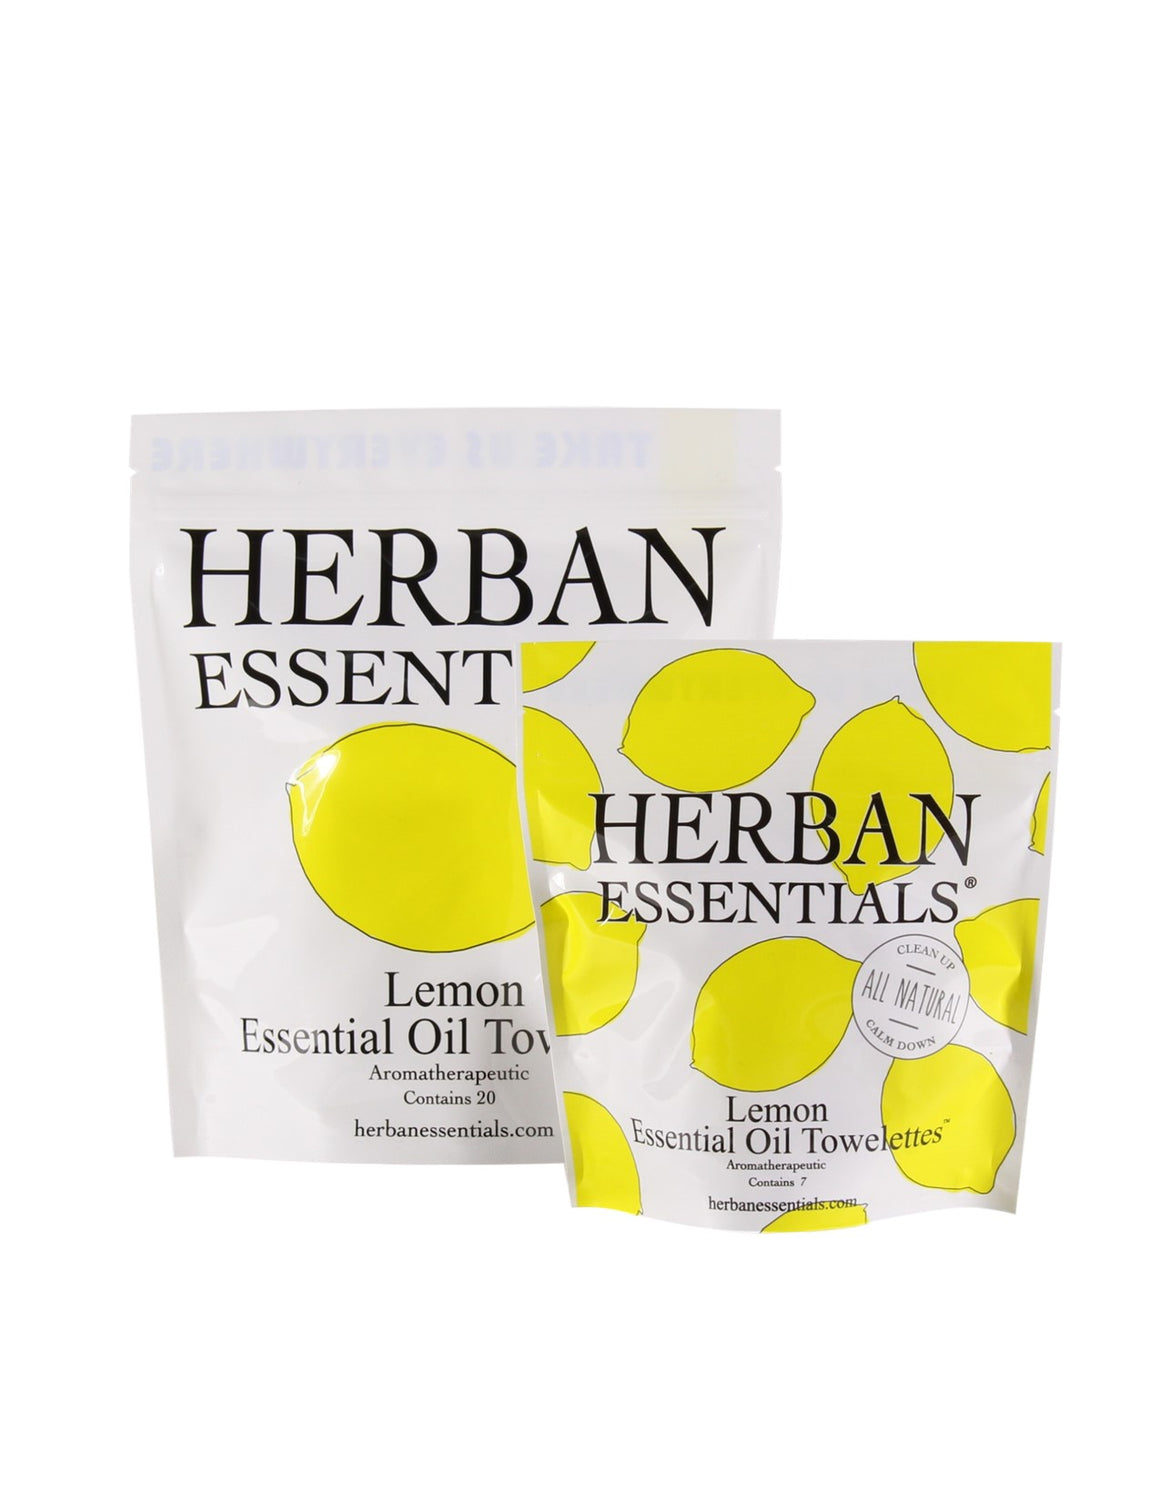 Herban Essentials - Lemon Essential Oil Towelettes